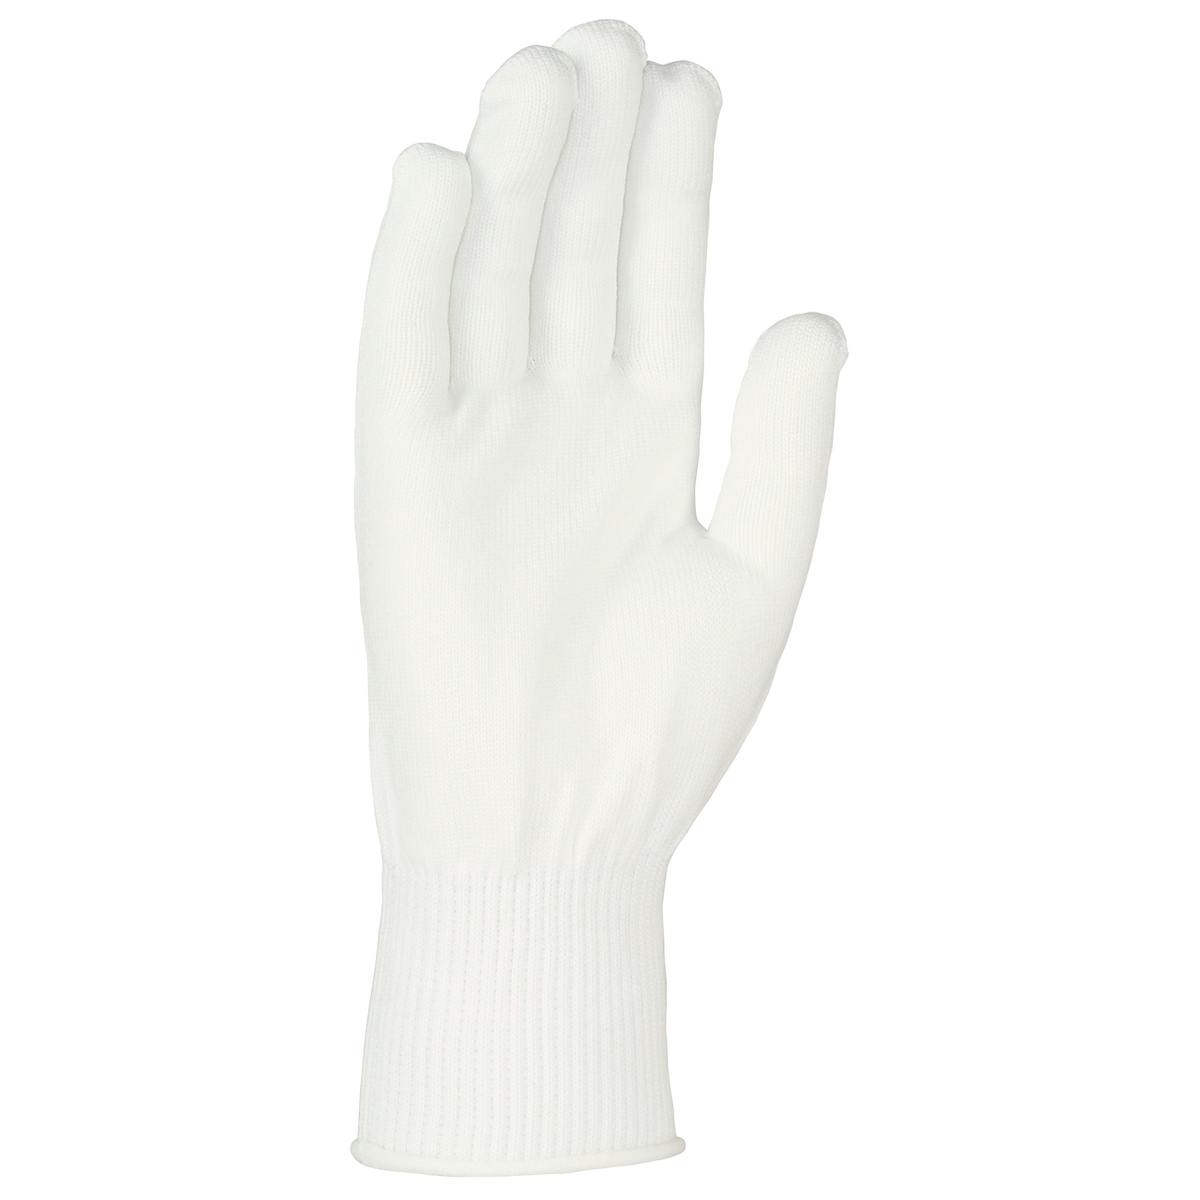 PIP® Seamless Knit Polyester Glove - Light Weight (M13PXY-LB)